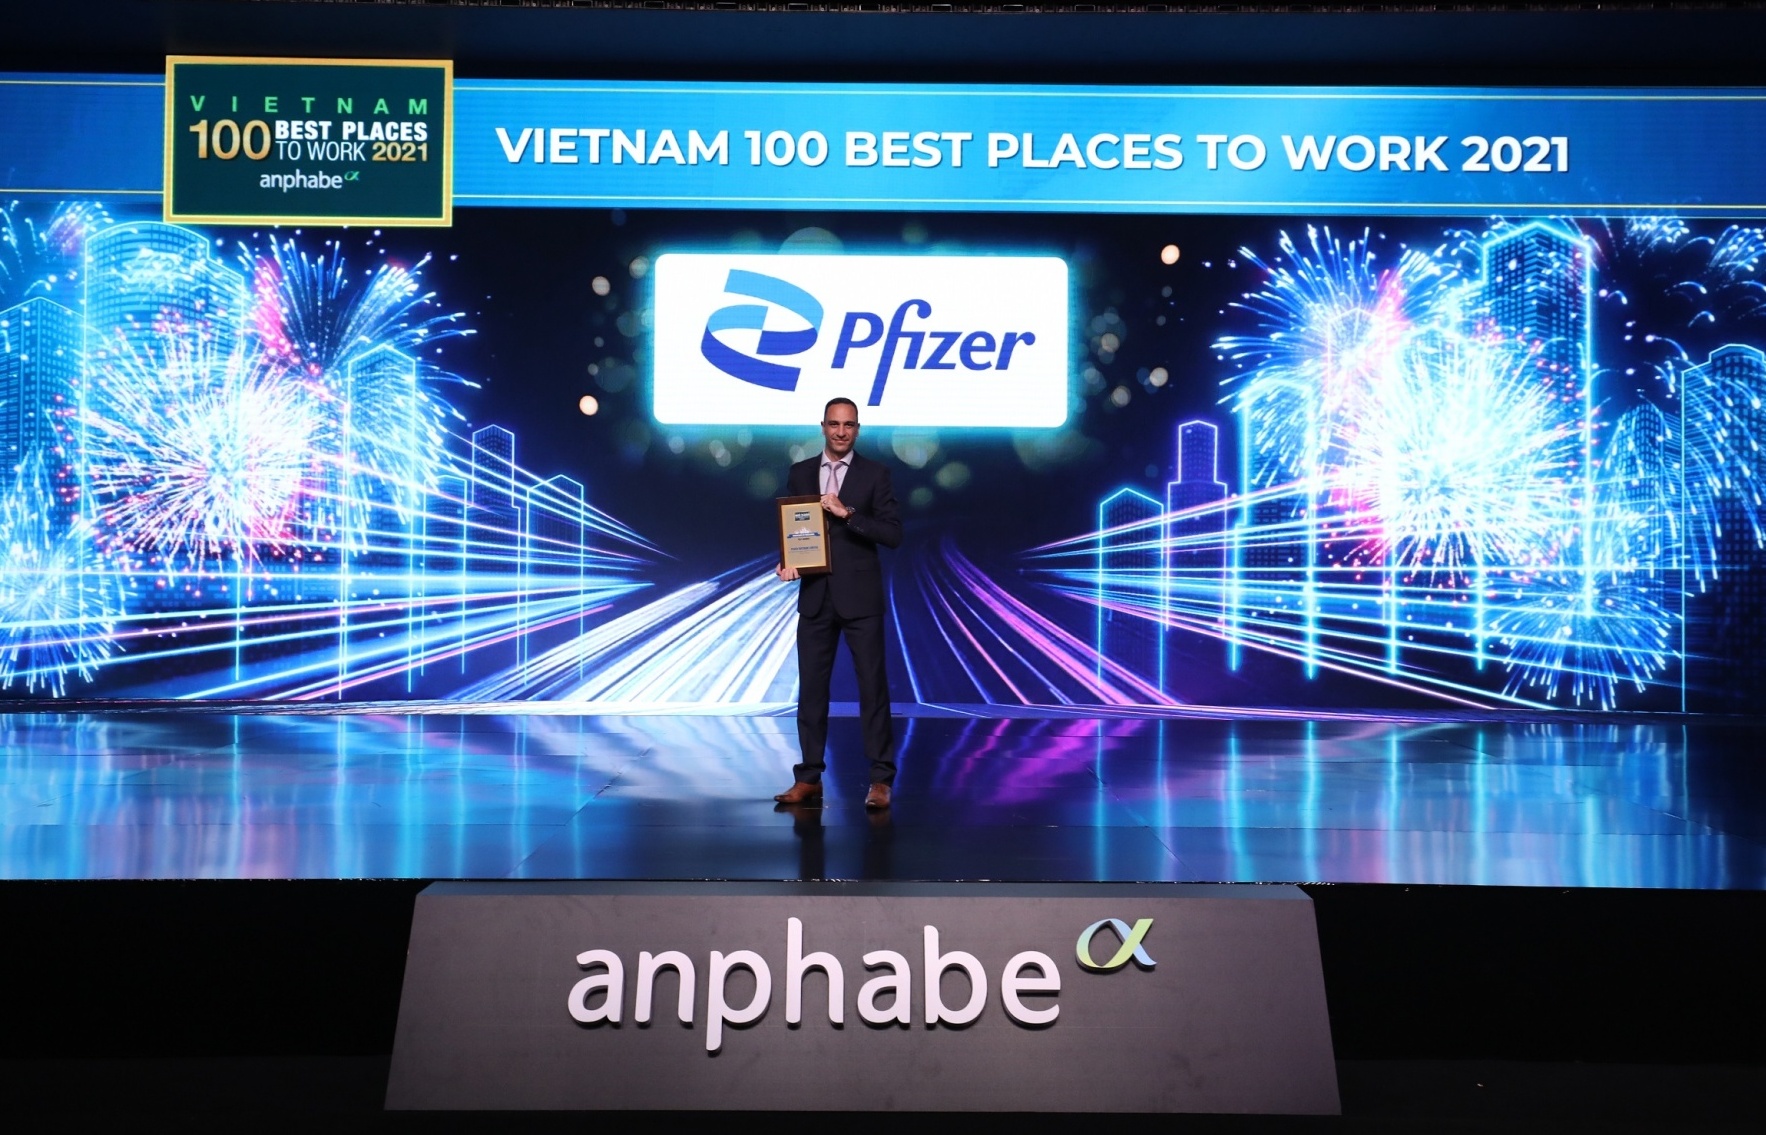 Pfizer Vietnam wins Top 100 Vietnam Best Places to Work in 2021